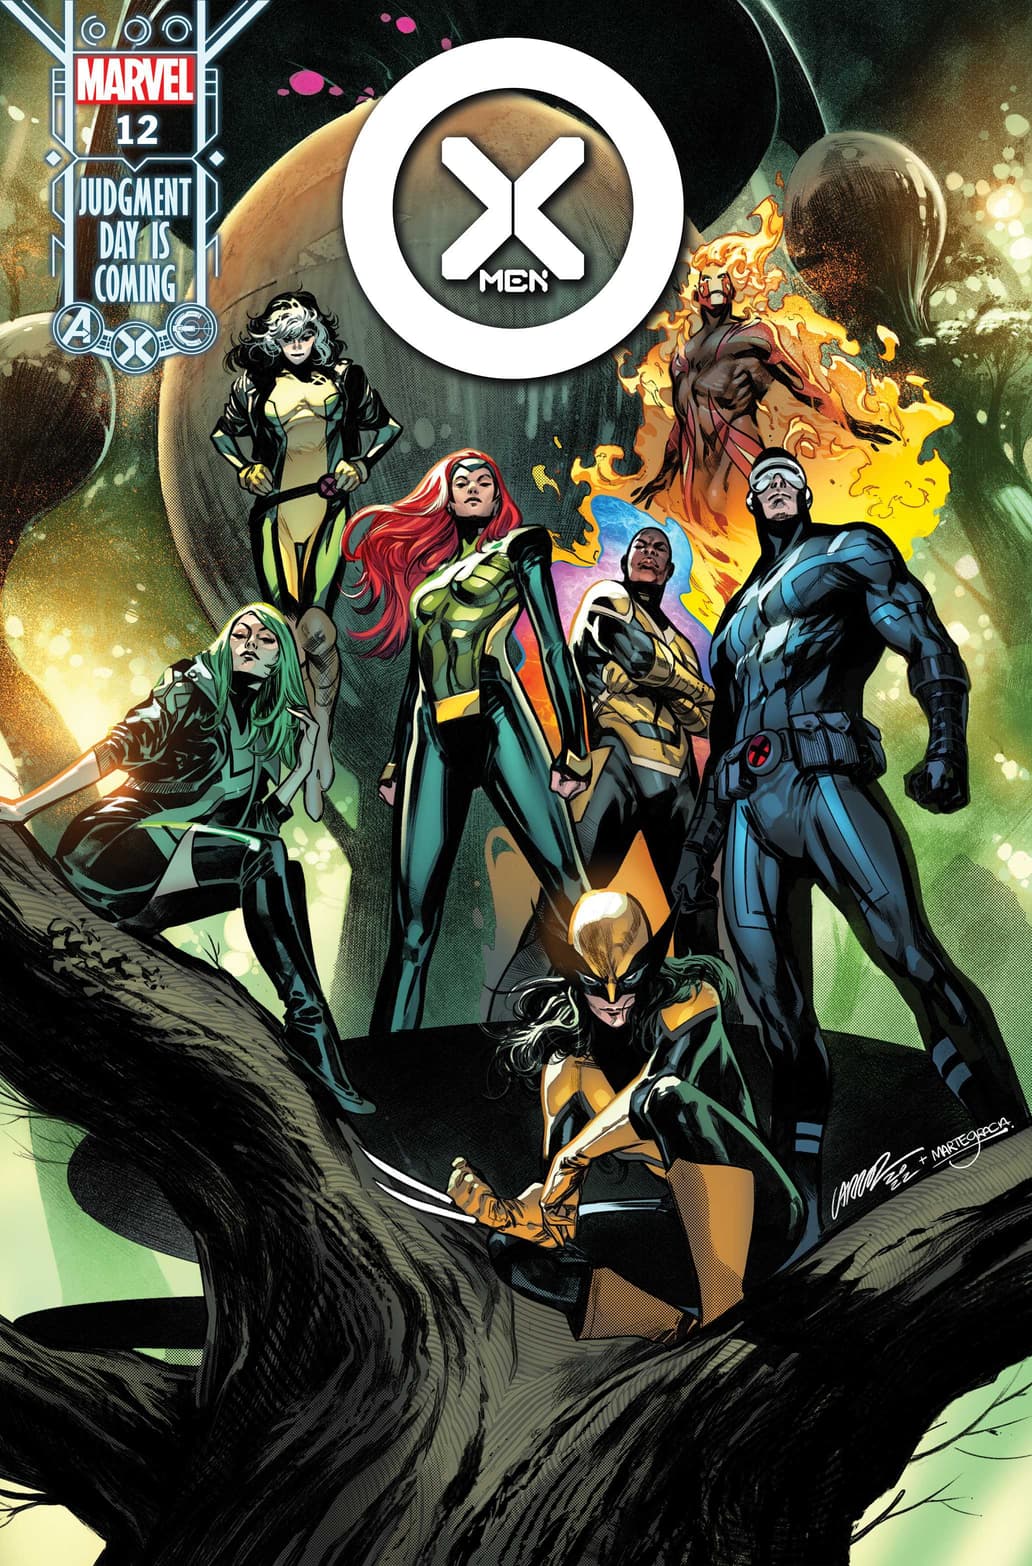 X-Men #12 cover by Pepe Larraz